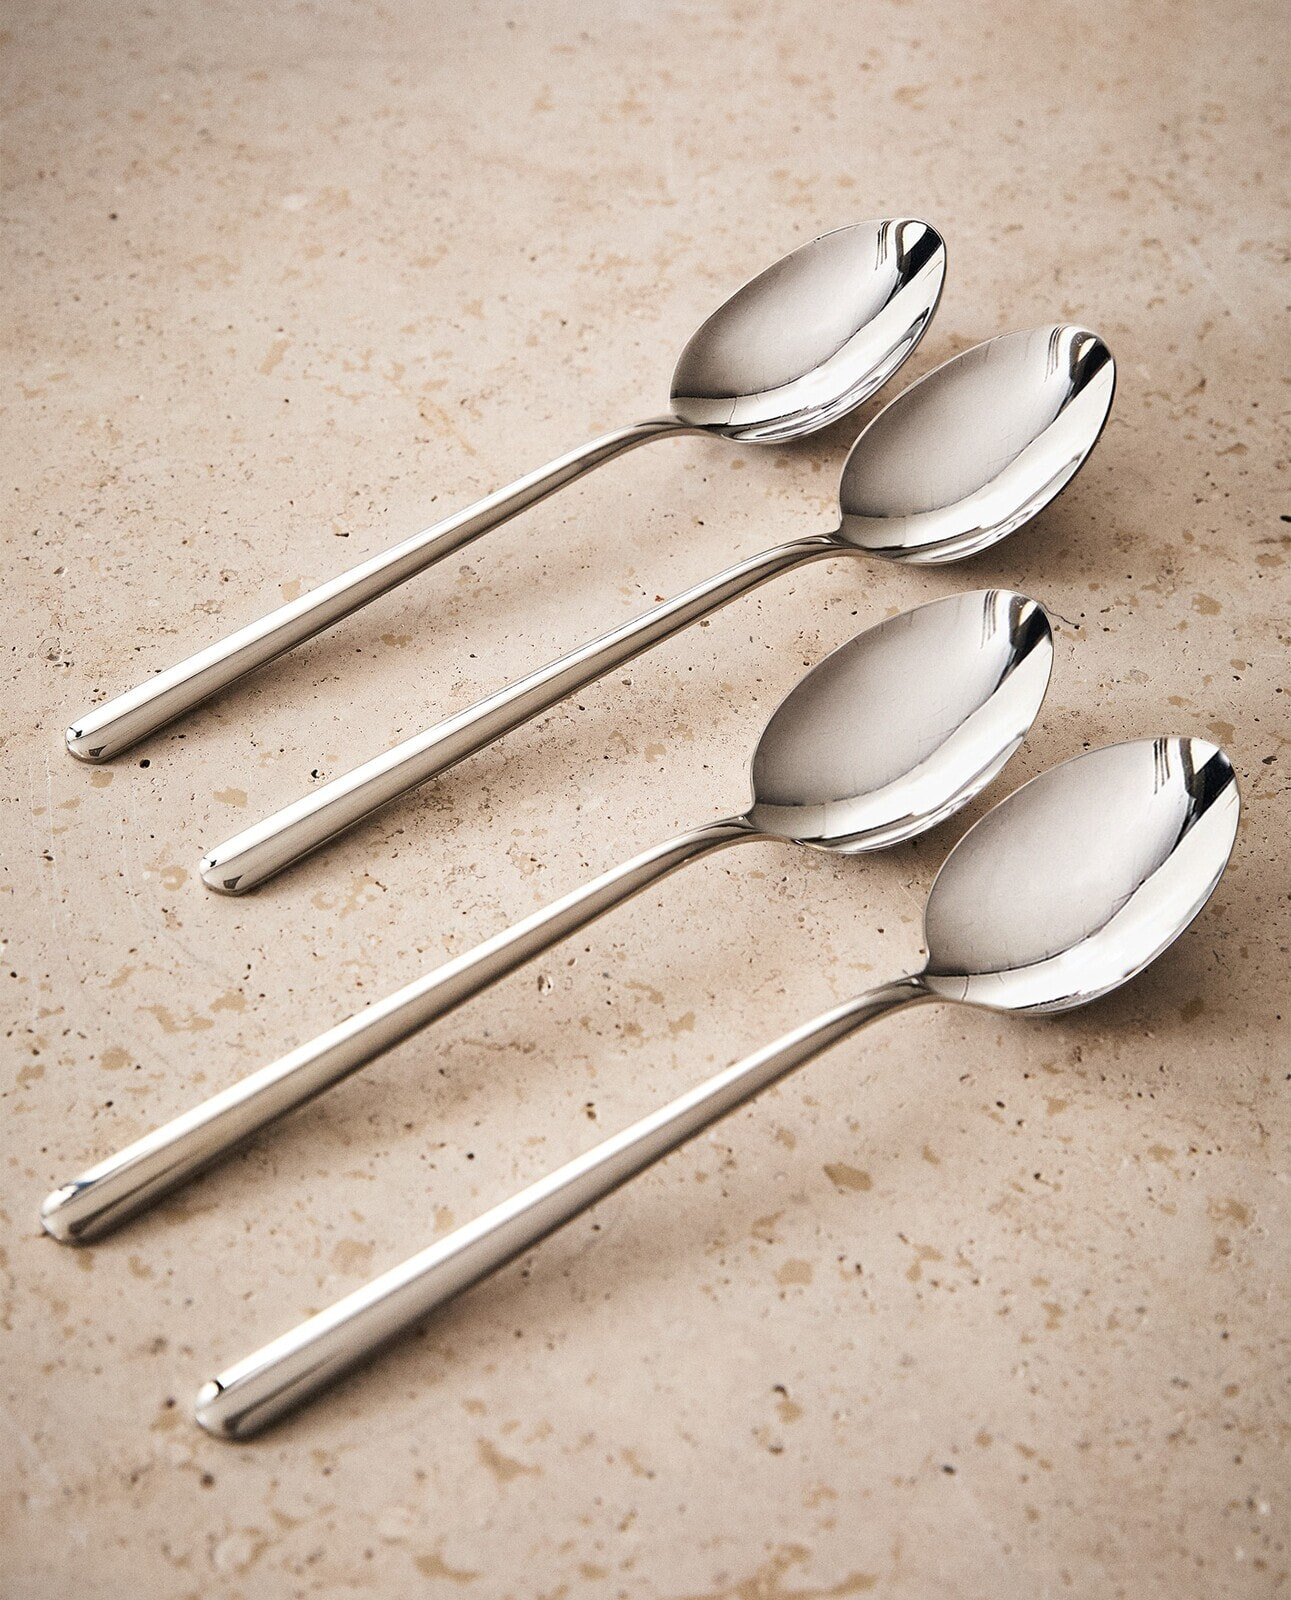 Set of shiny steel spoons